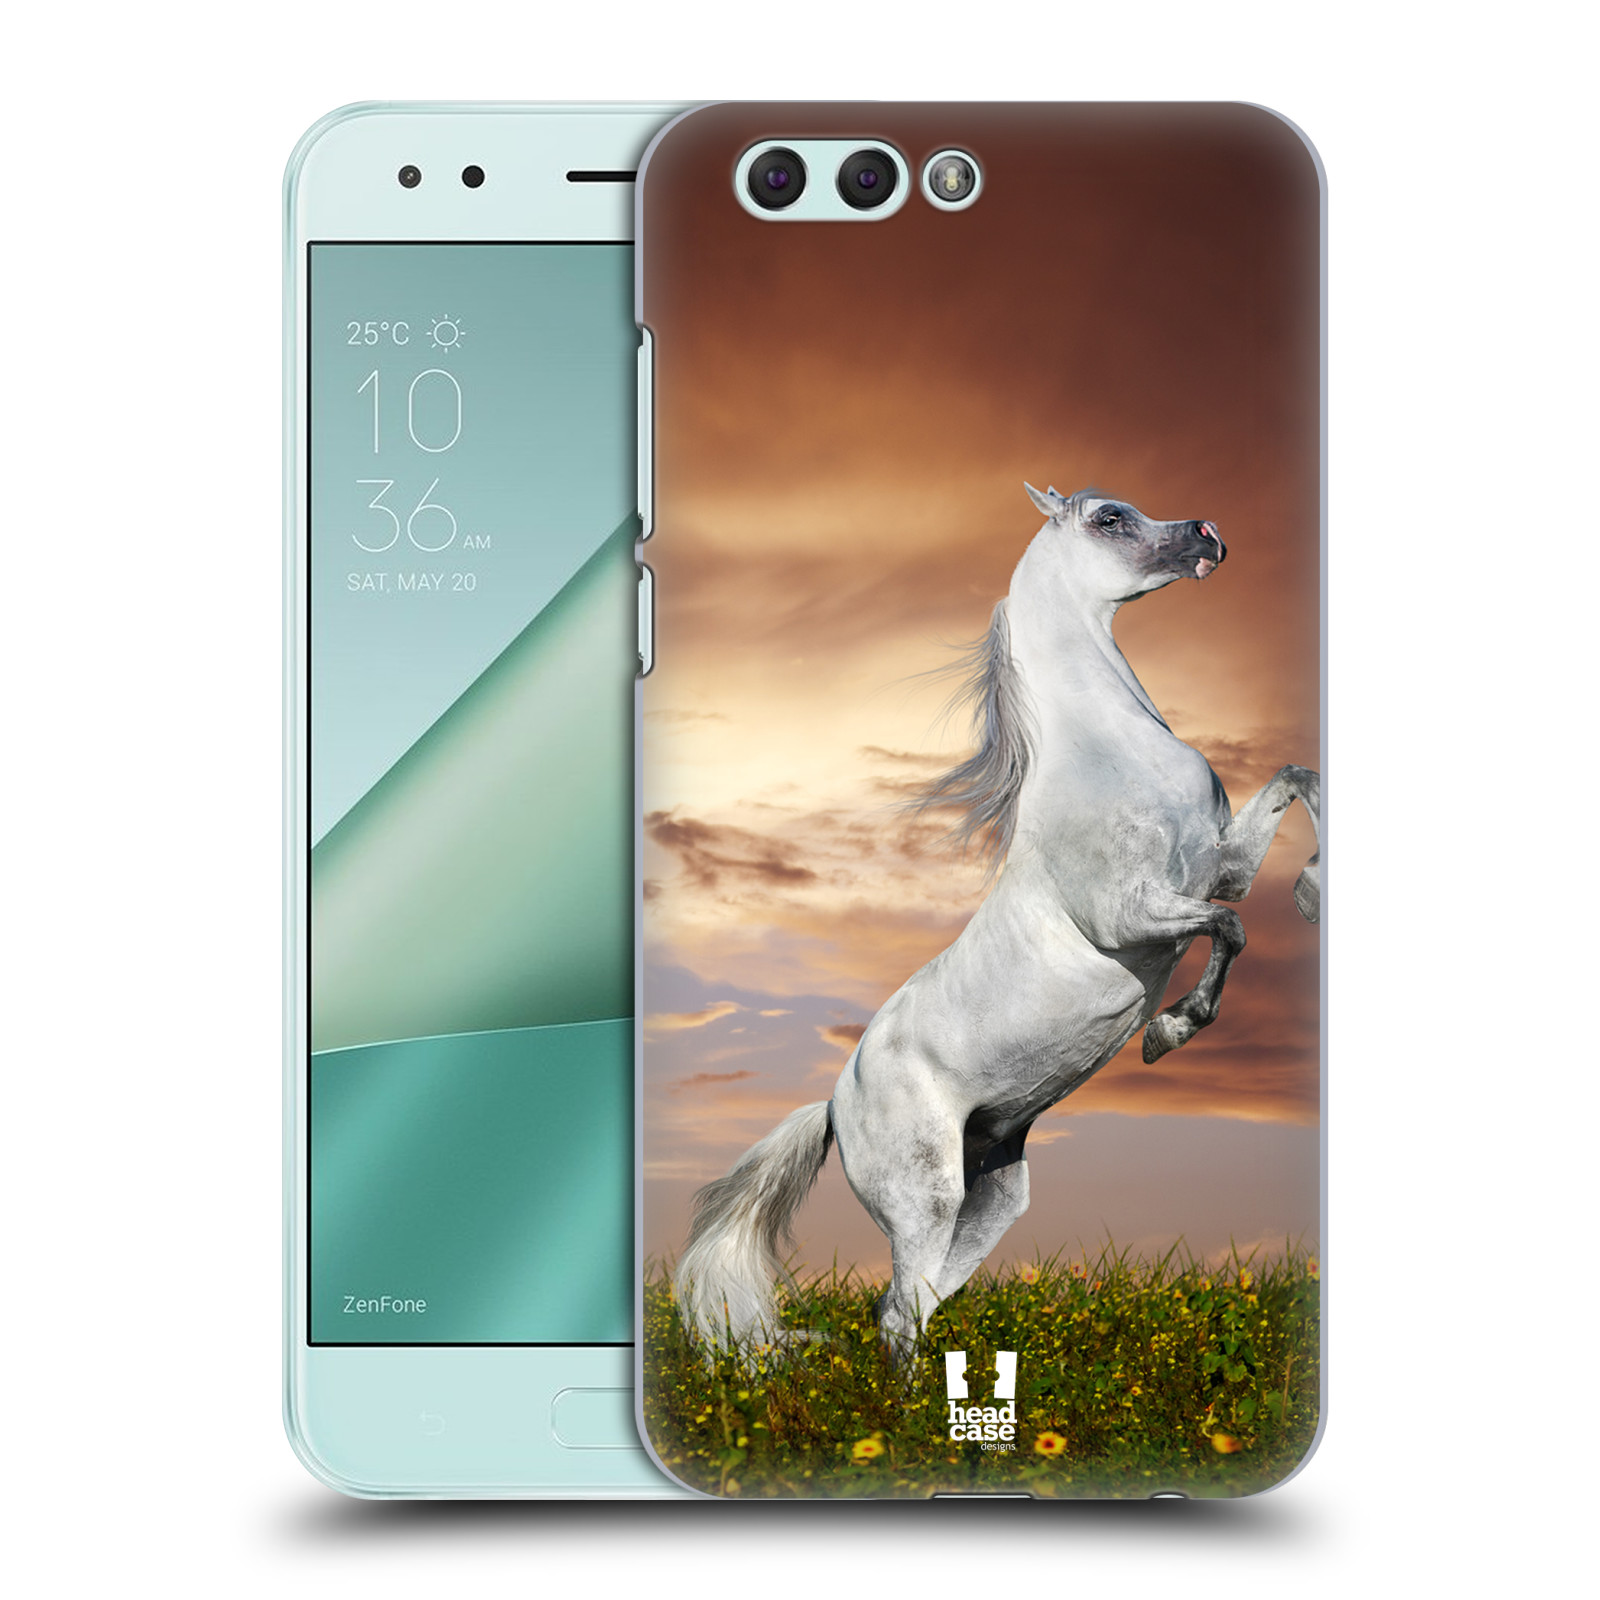 HEAD CASE plastový obal na mobil Asus Zenfone 4 ZE554KL vzor Divočina, Divoký život a zvířata foto DIVOKÝ KŮŇ MUSTANG BÍLÁ